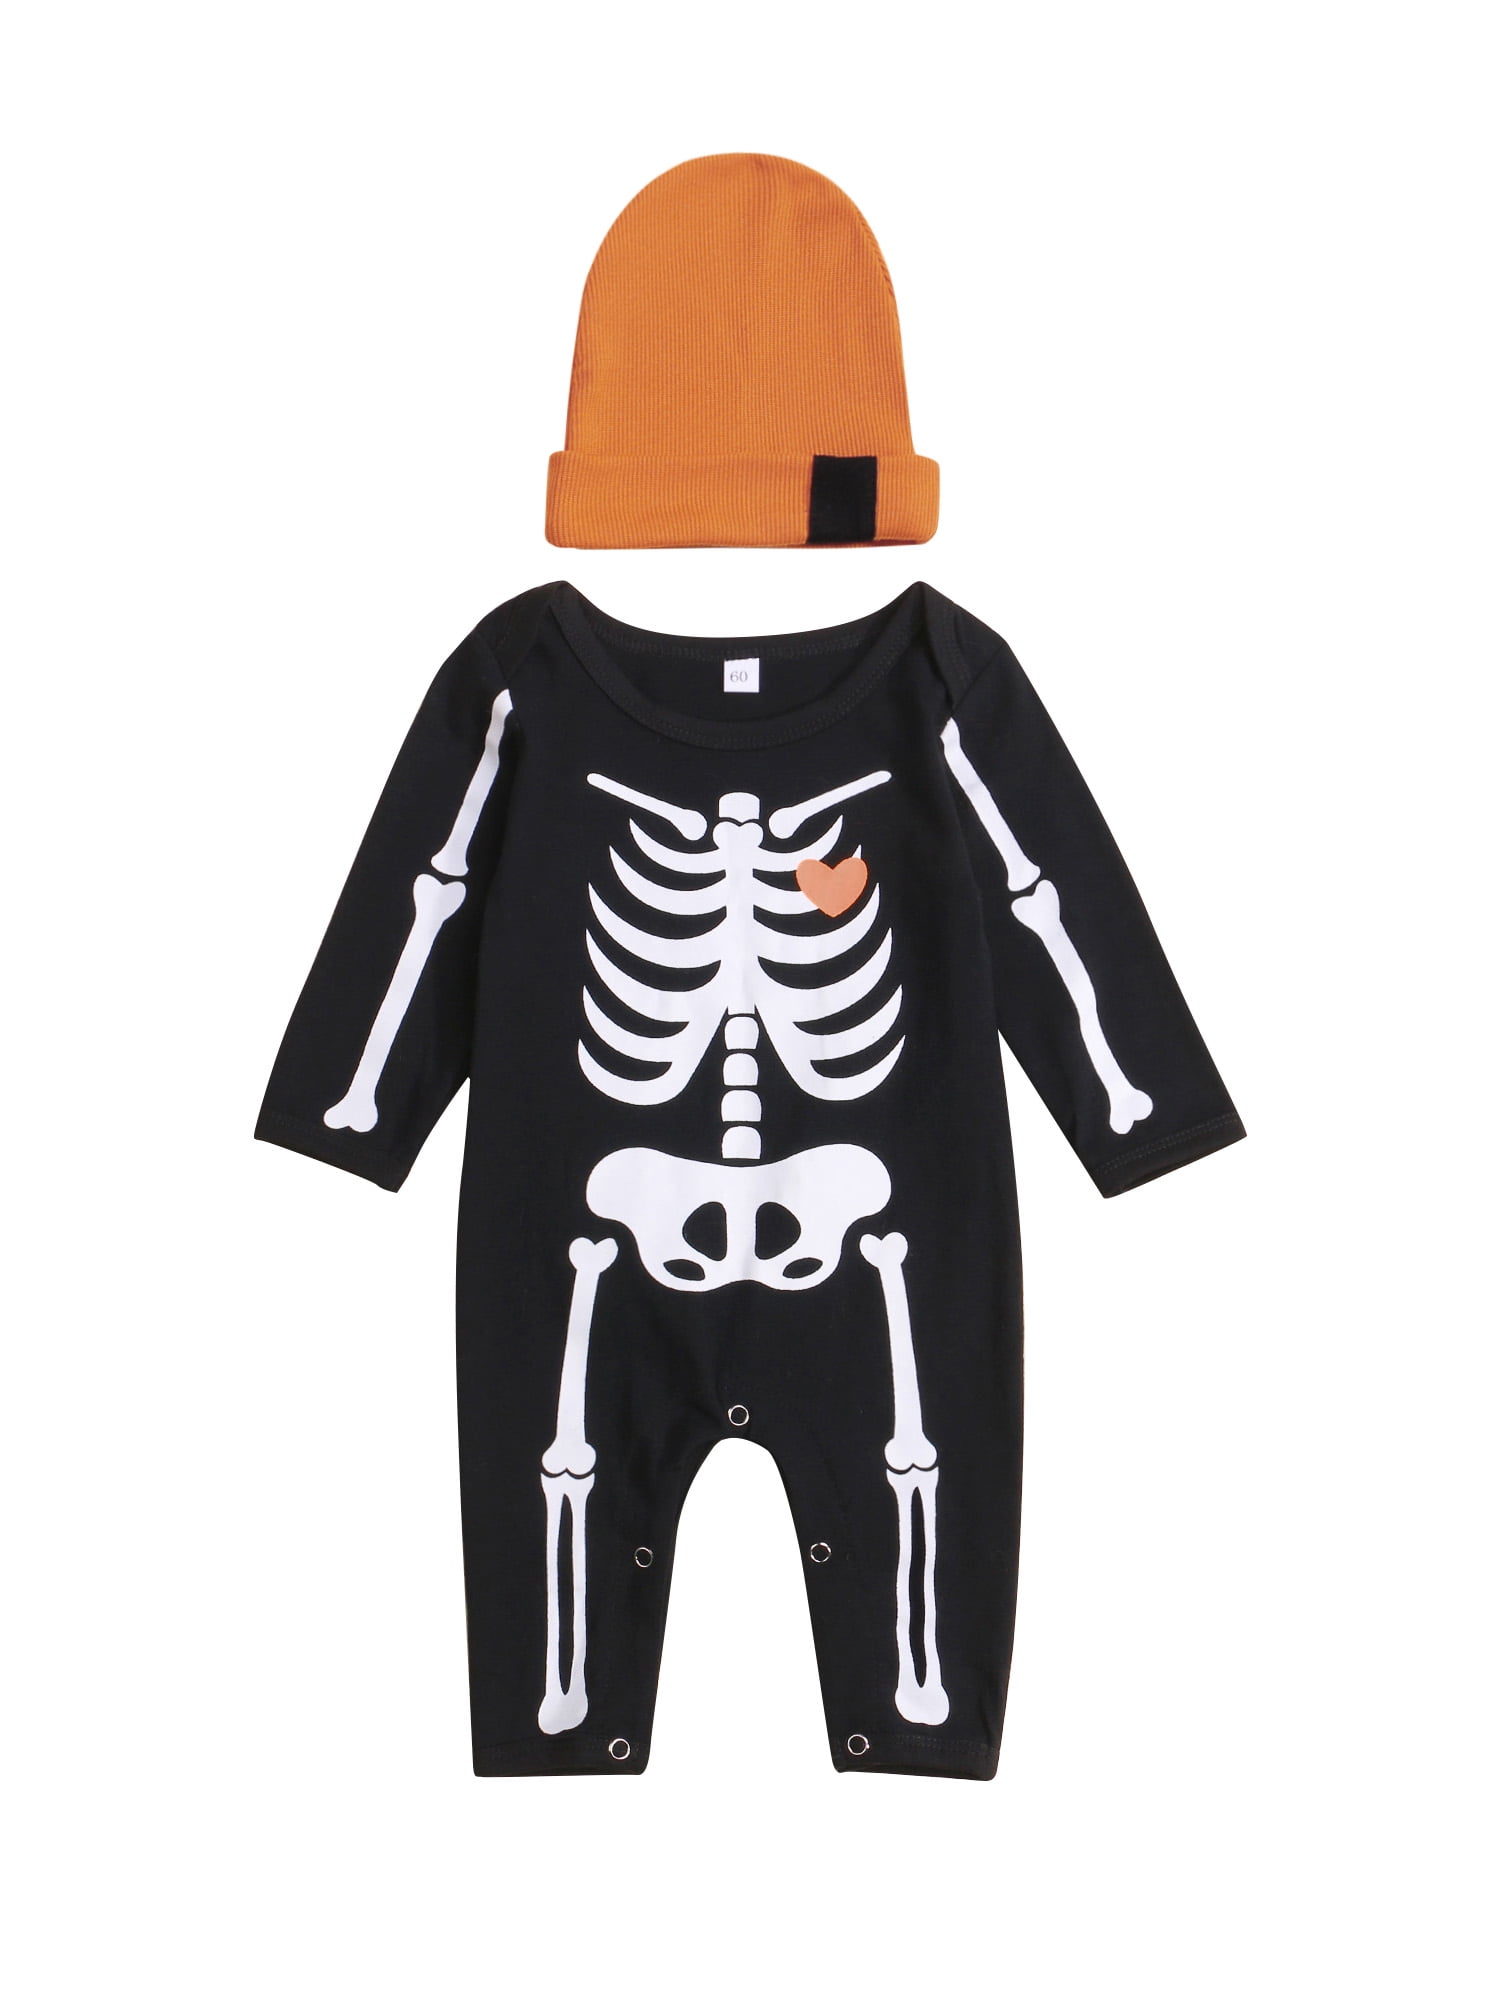 Infant Baby Boy Girl Halloween Cartoon Skull Print Romper Bodysuit+Hat Outfit US 